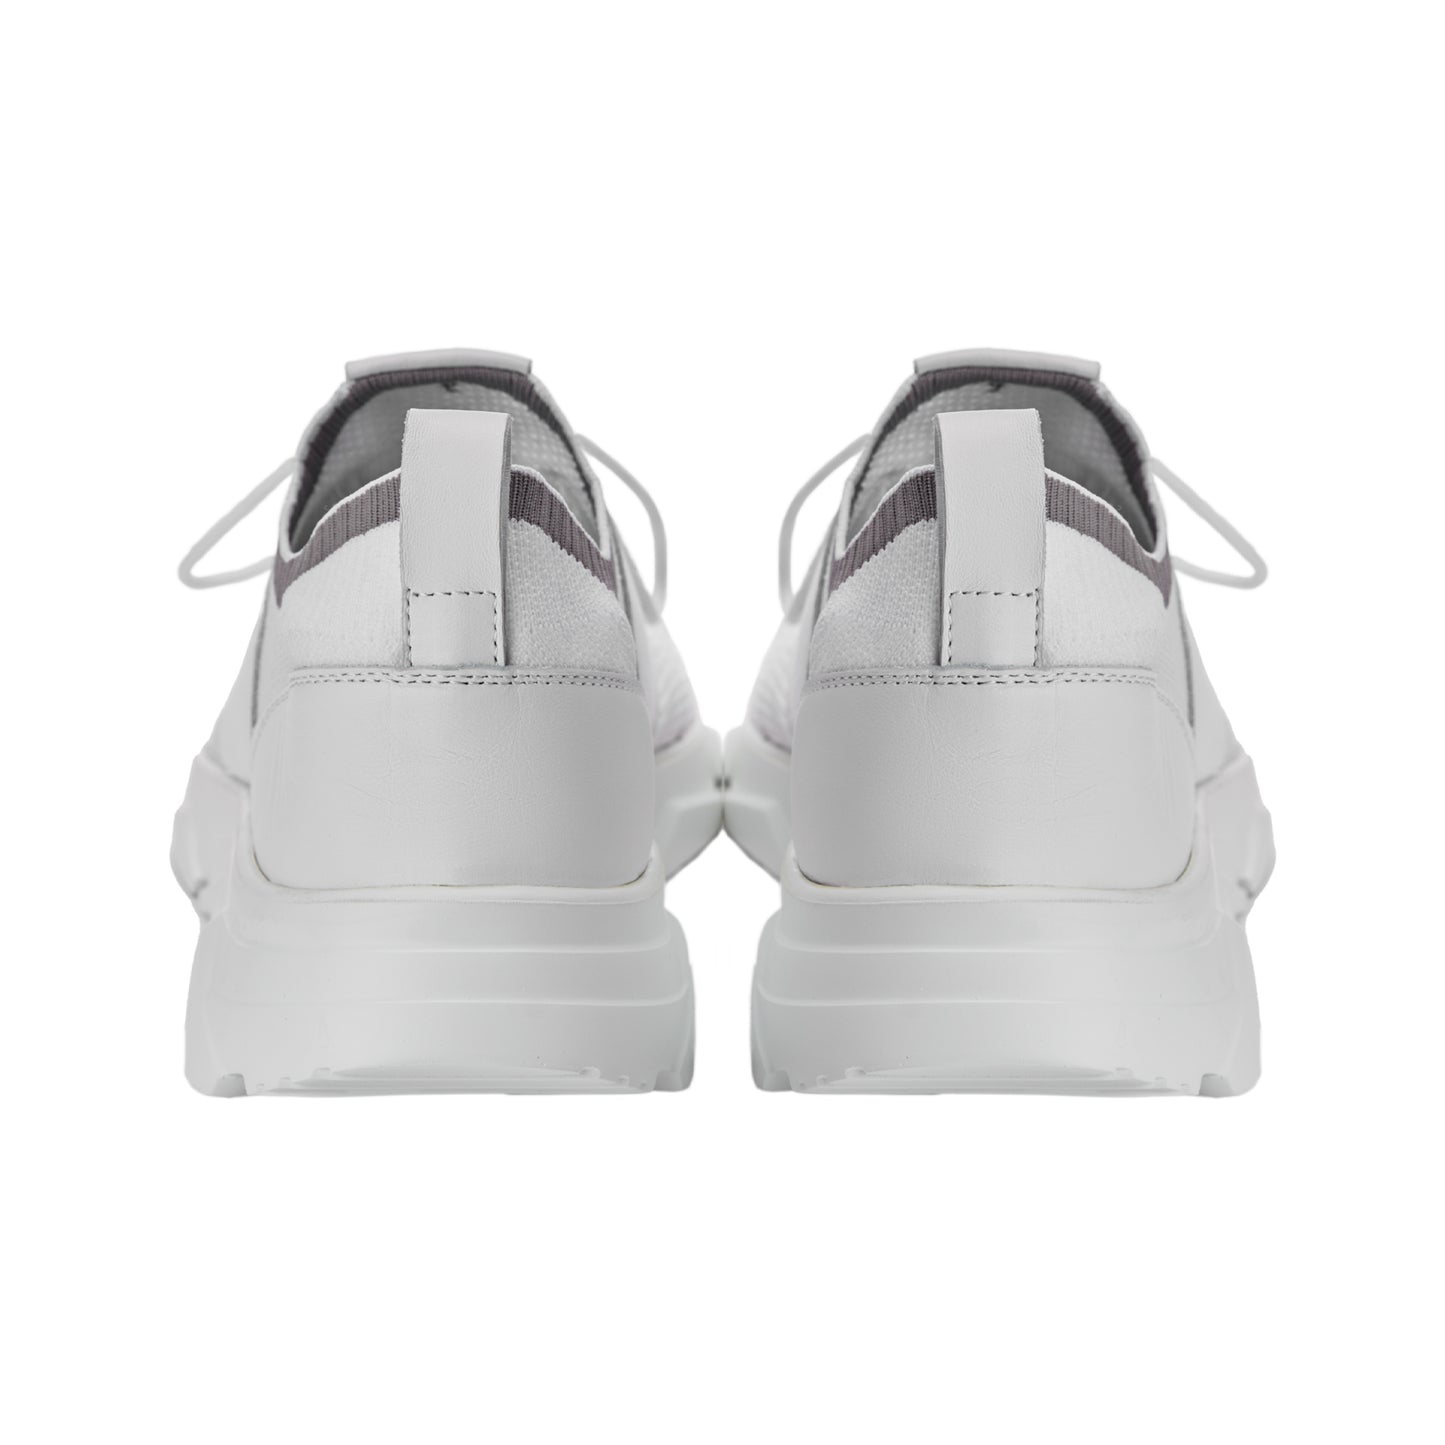 Peter Sneaker in White